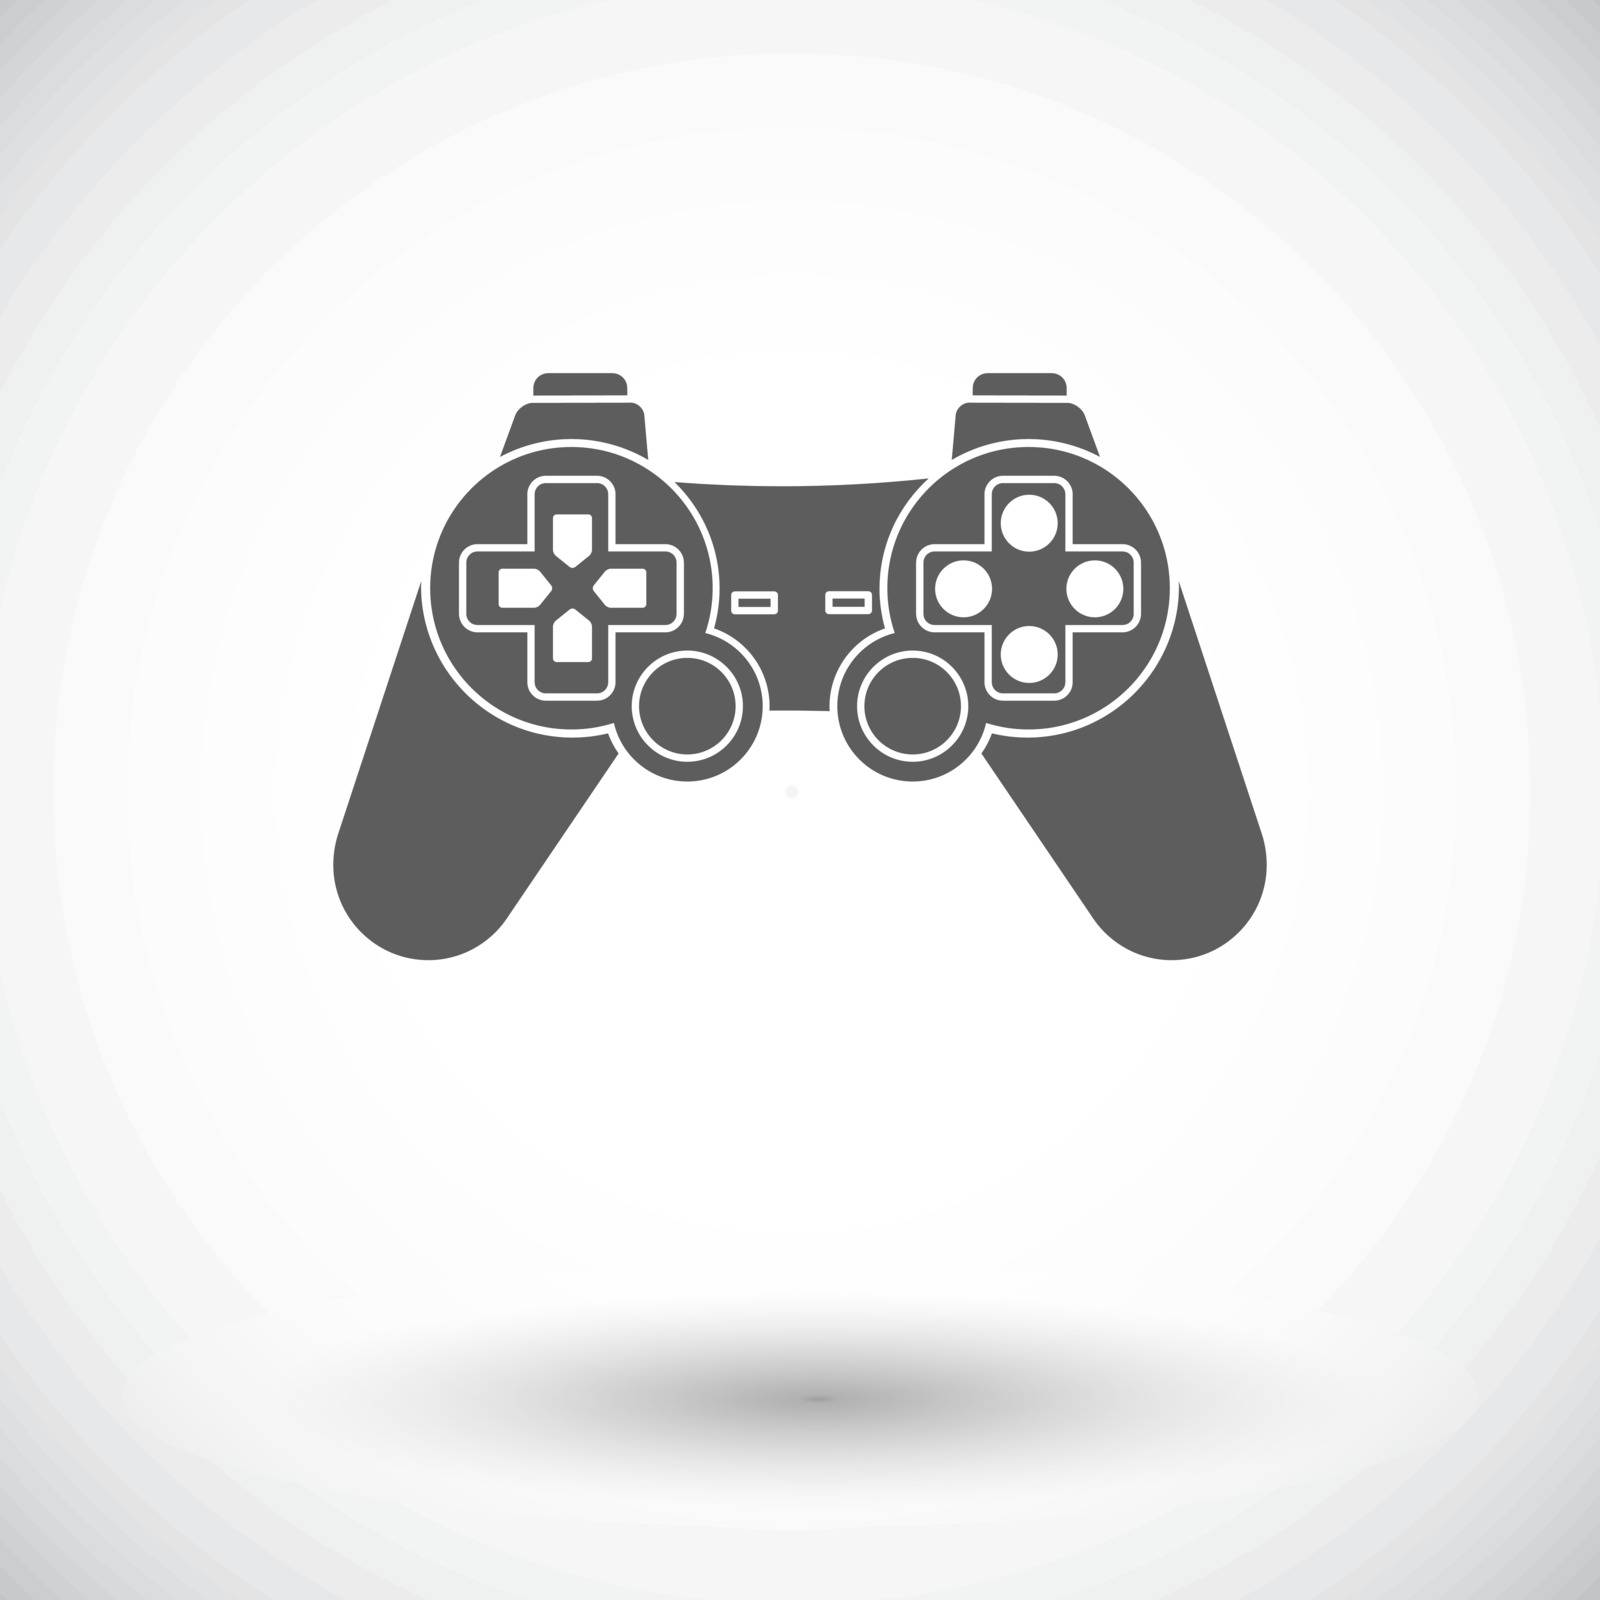 Gamepad. Single flat icon on white background. Vector illustration.